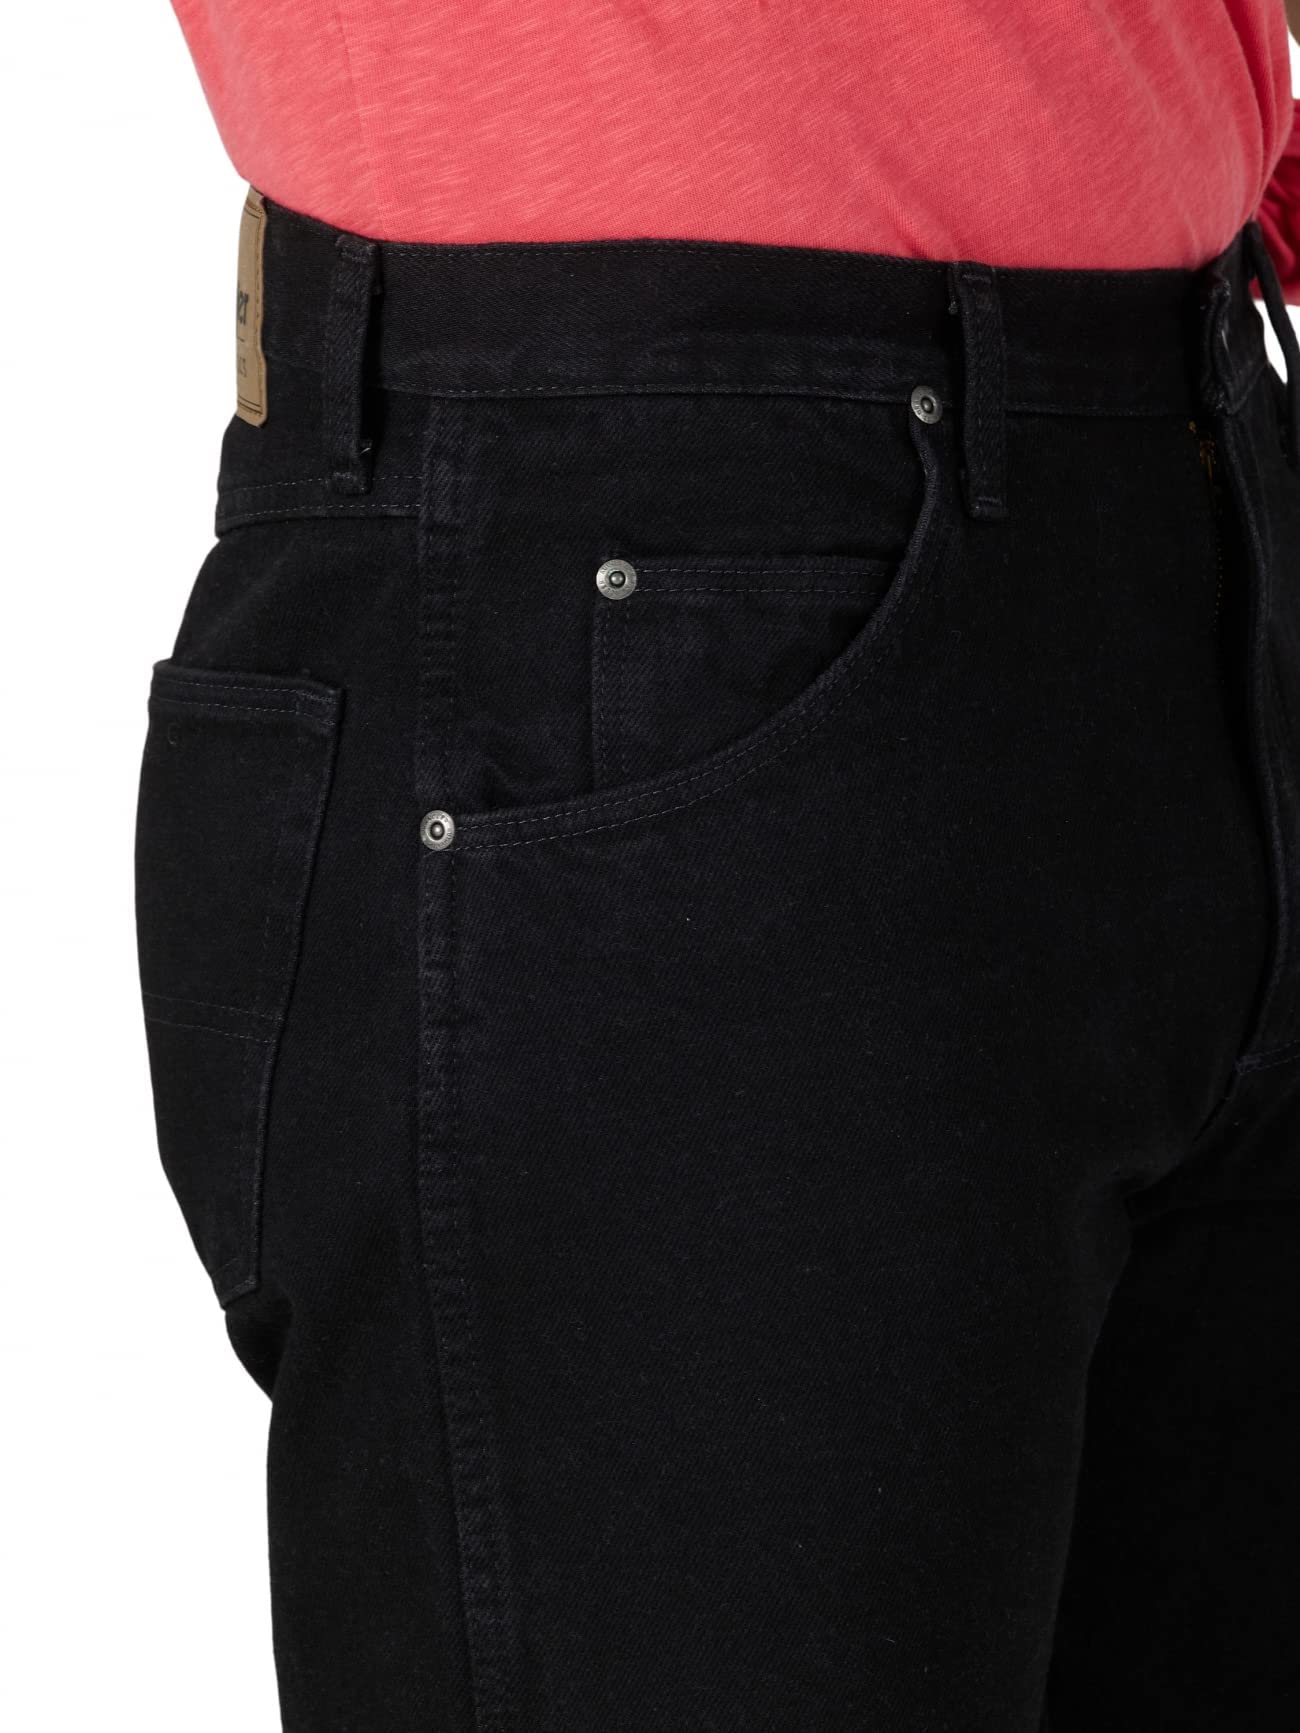 Wrangler Authentics Men's Classic 5-Pocket Regular Fit Cotton Jean, Black, 40W x 30L